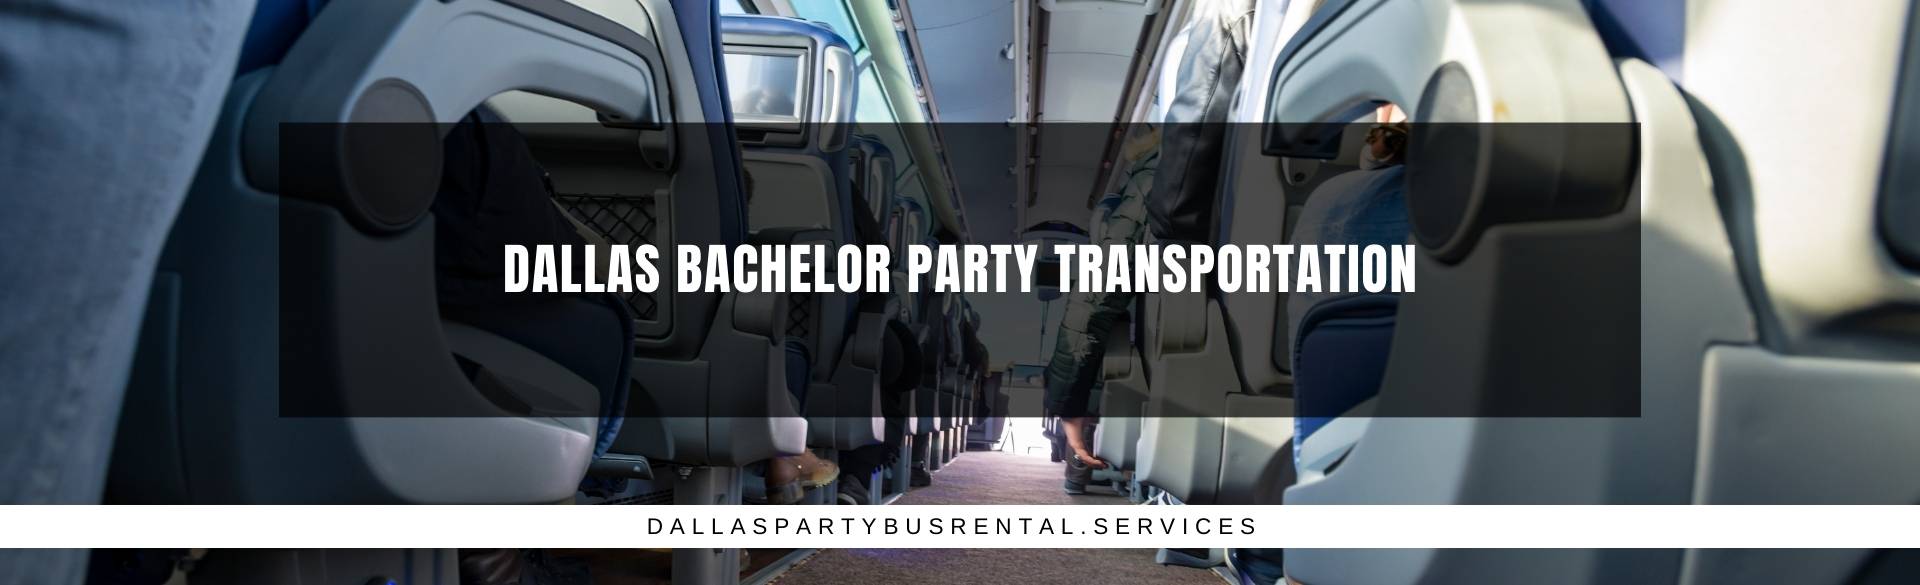 Dallas Bachelor Party Transportation